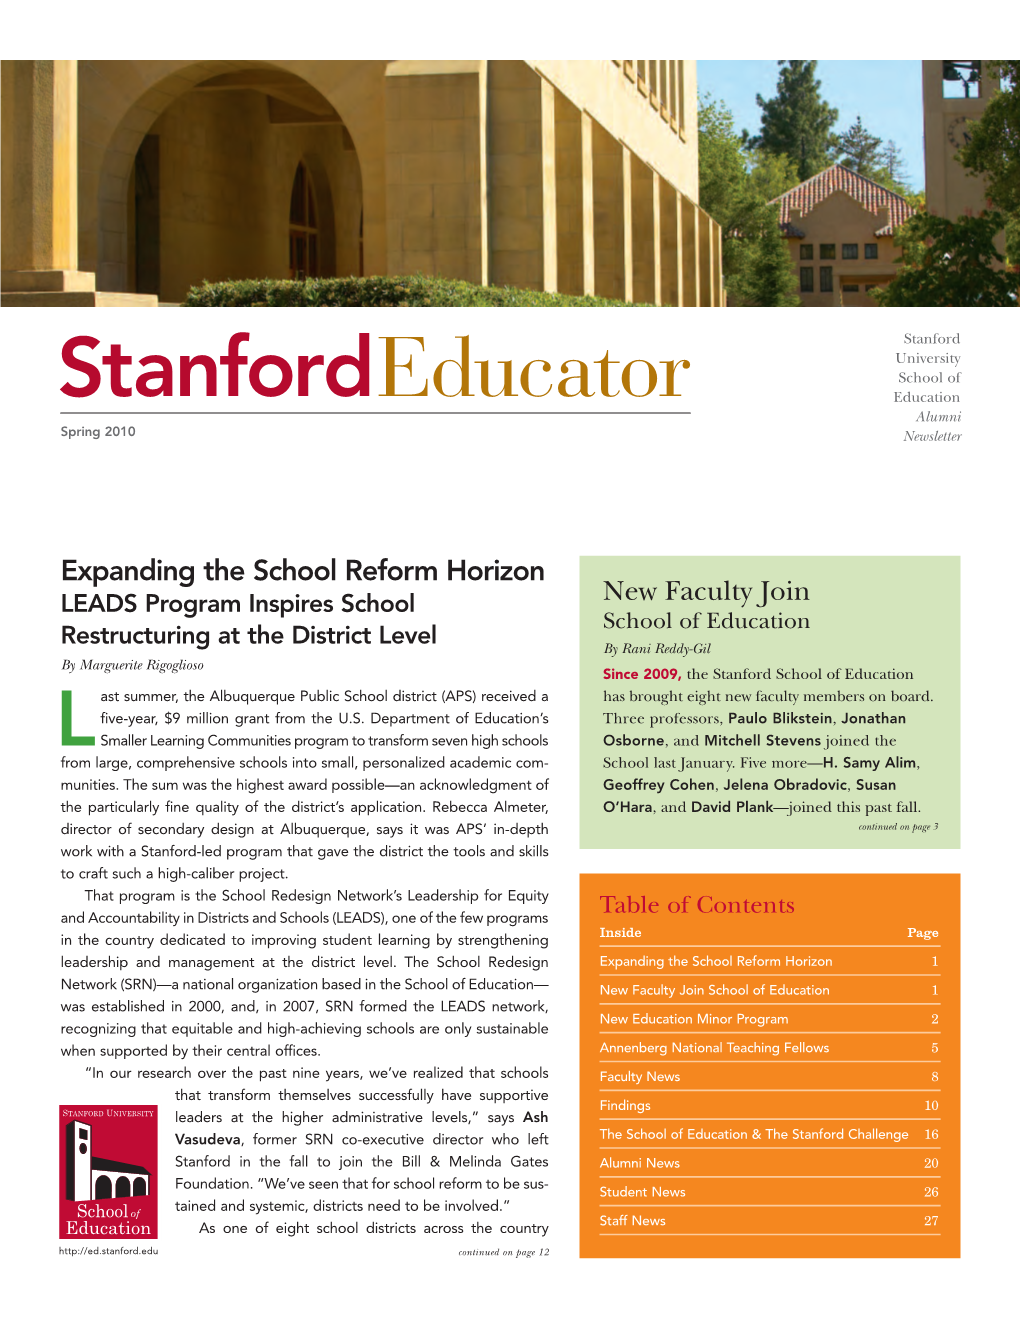 Stanfordeducator Education Alumni Spring 2010 Newsletter